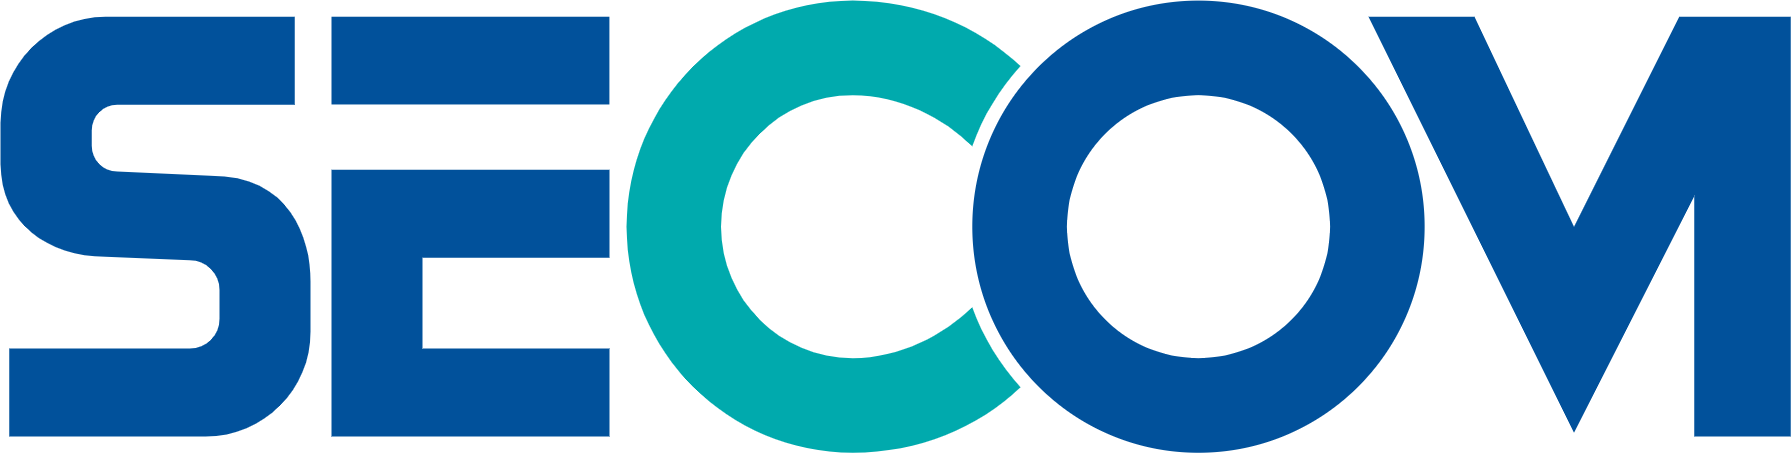 Secom
 logo (transparent PNG)